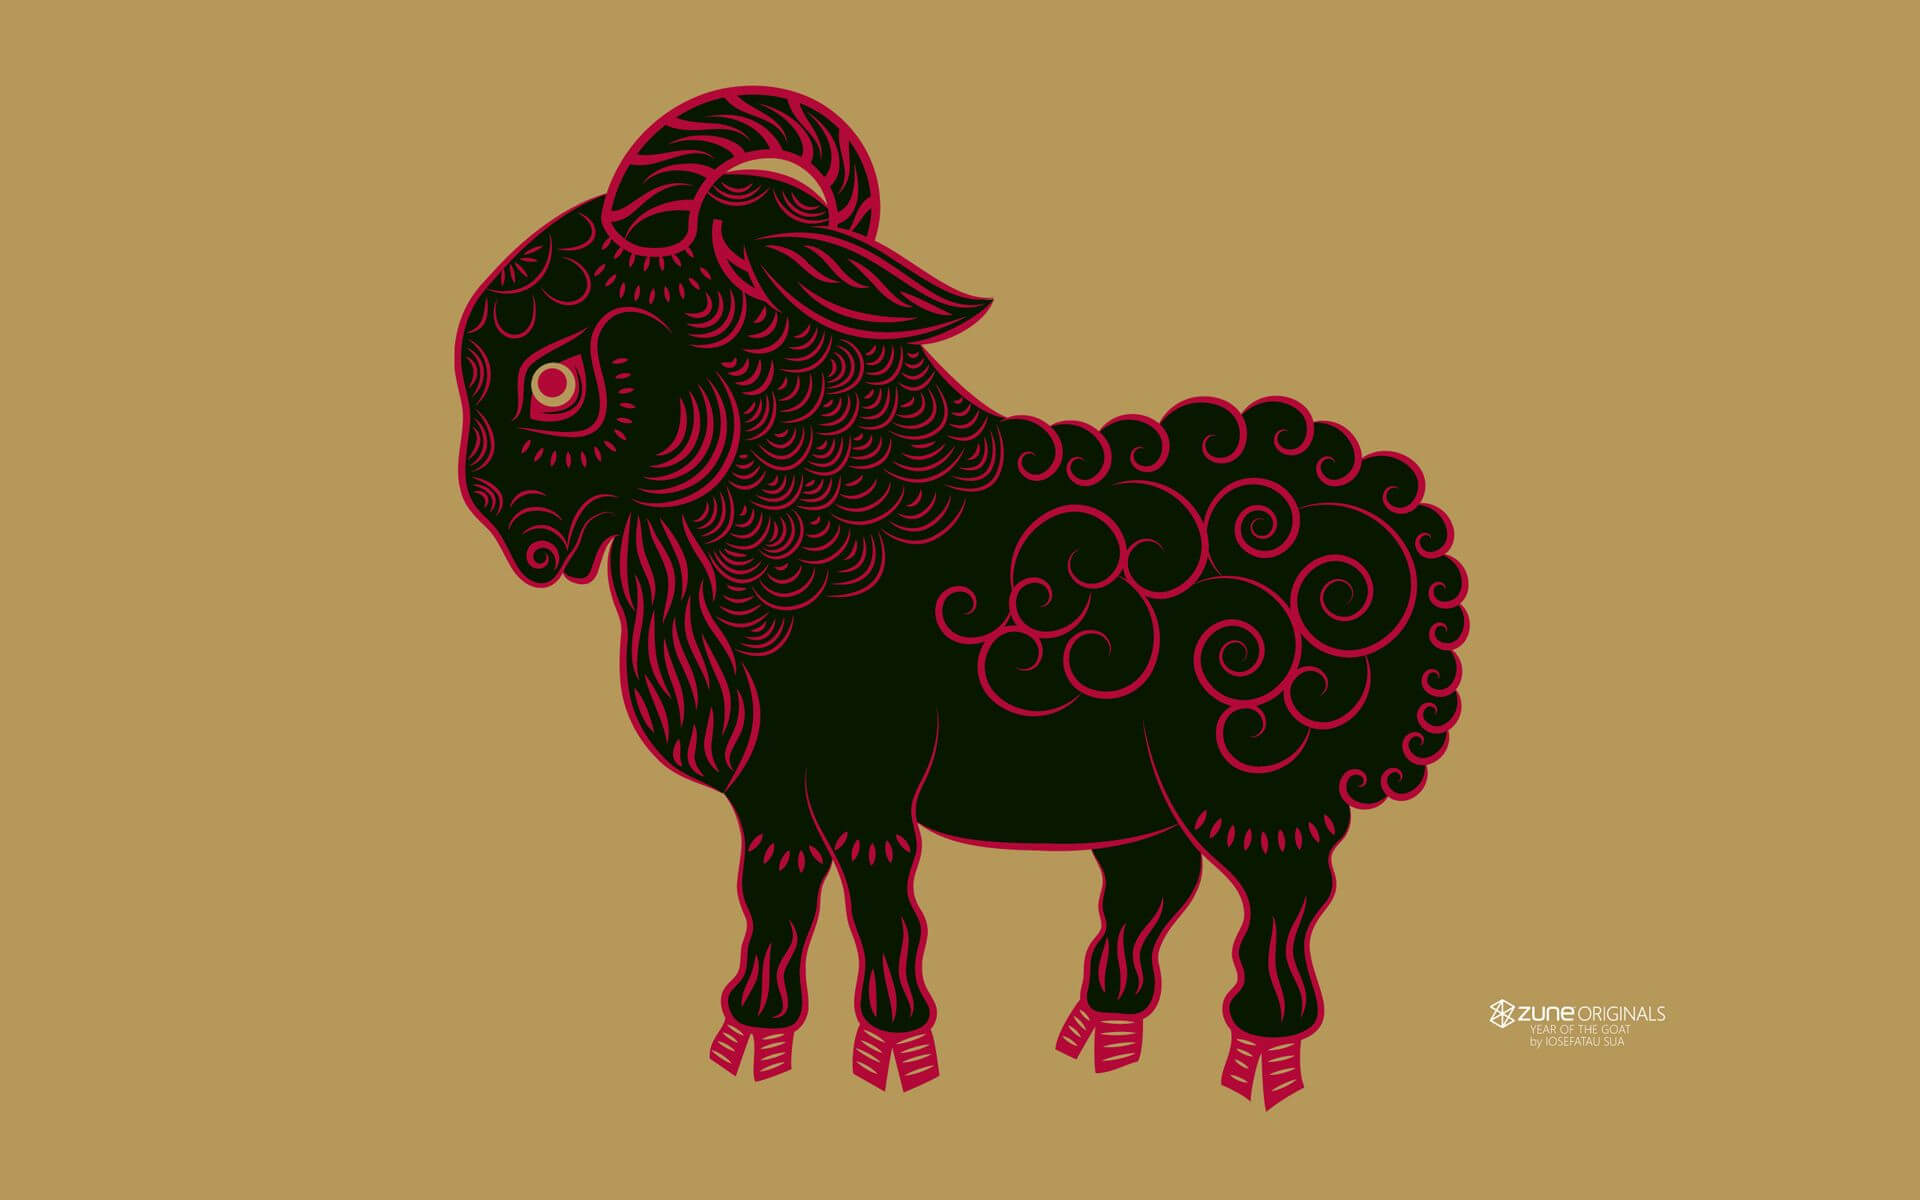 Goat in chinese zodiac story